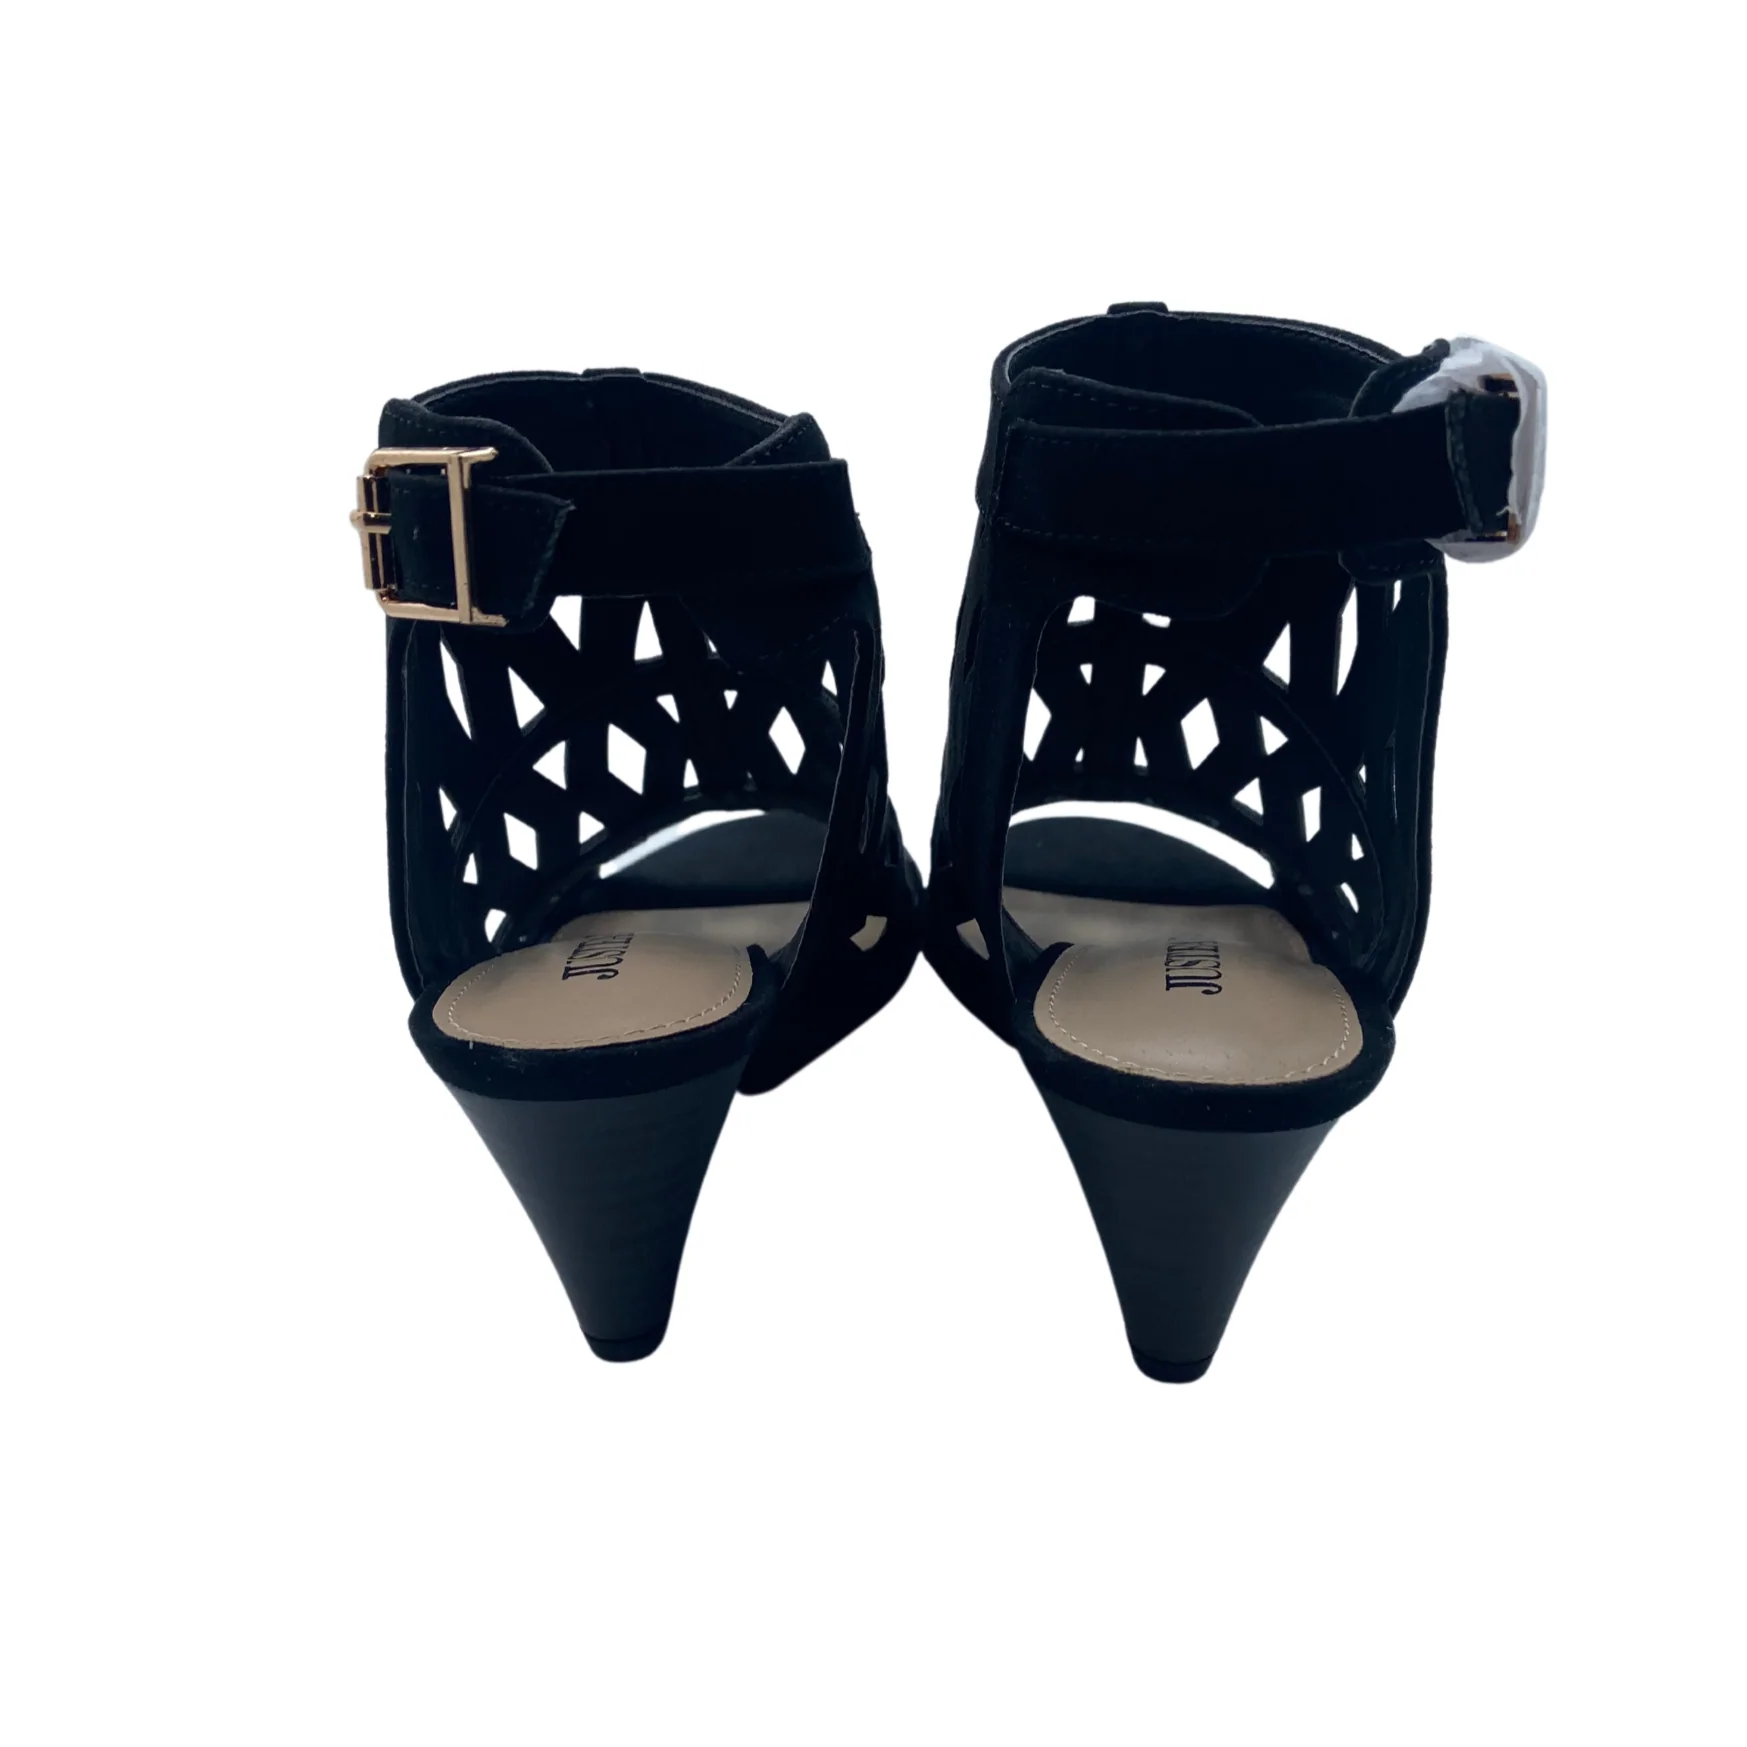 JustFab Women's Heels / Camilla / Black Wedge / 2.5" Heel / Size 6